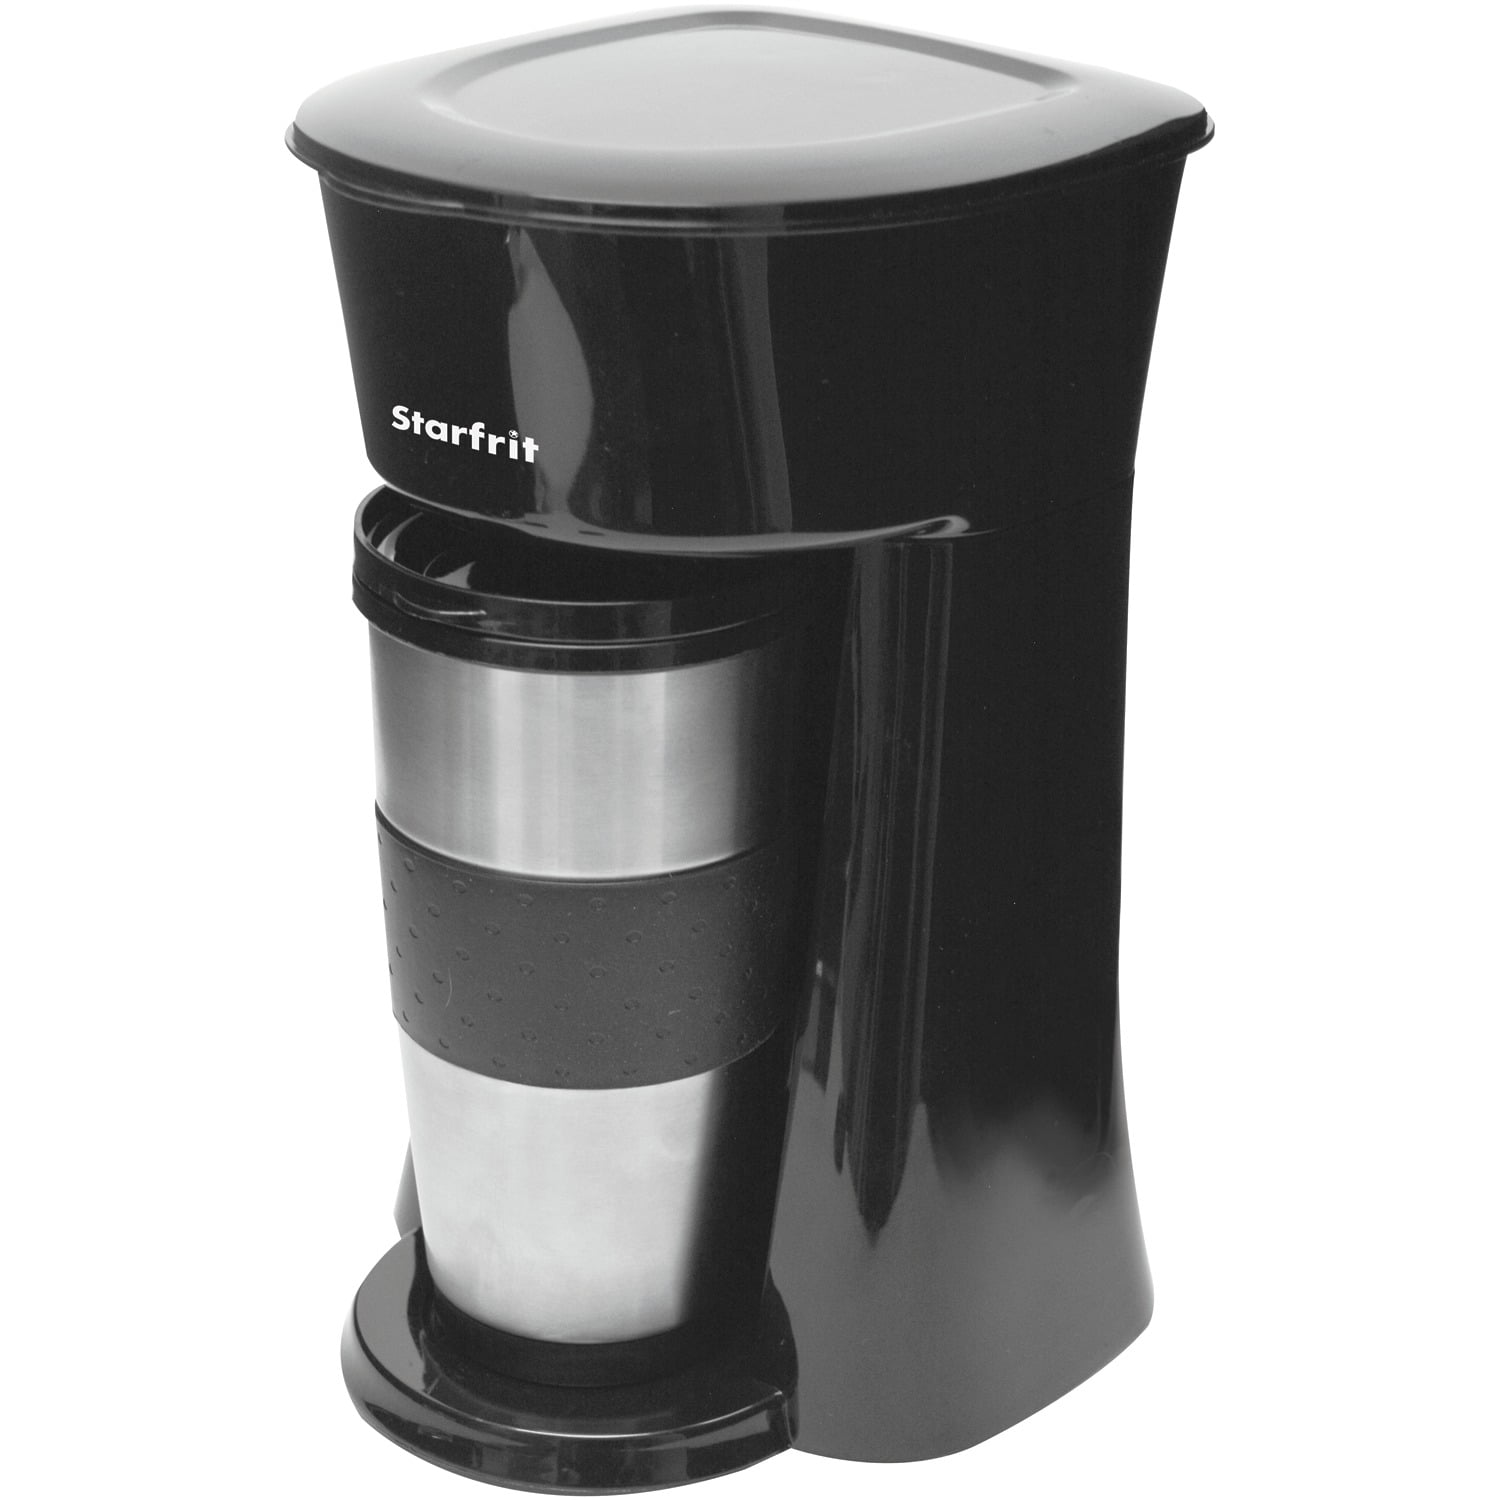 Starfrit 12 Cup Drip Coffee Maker Machine